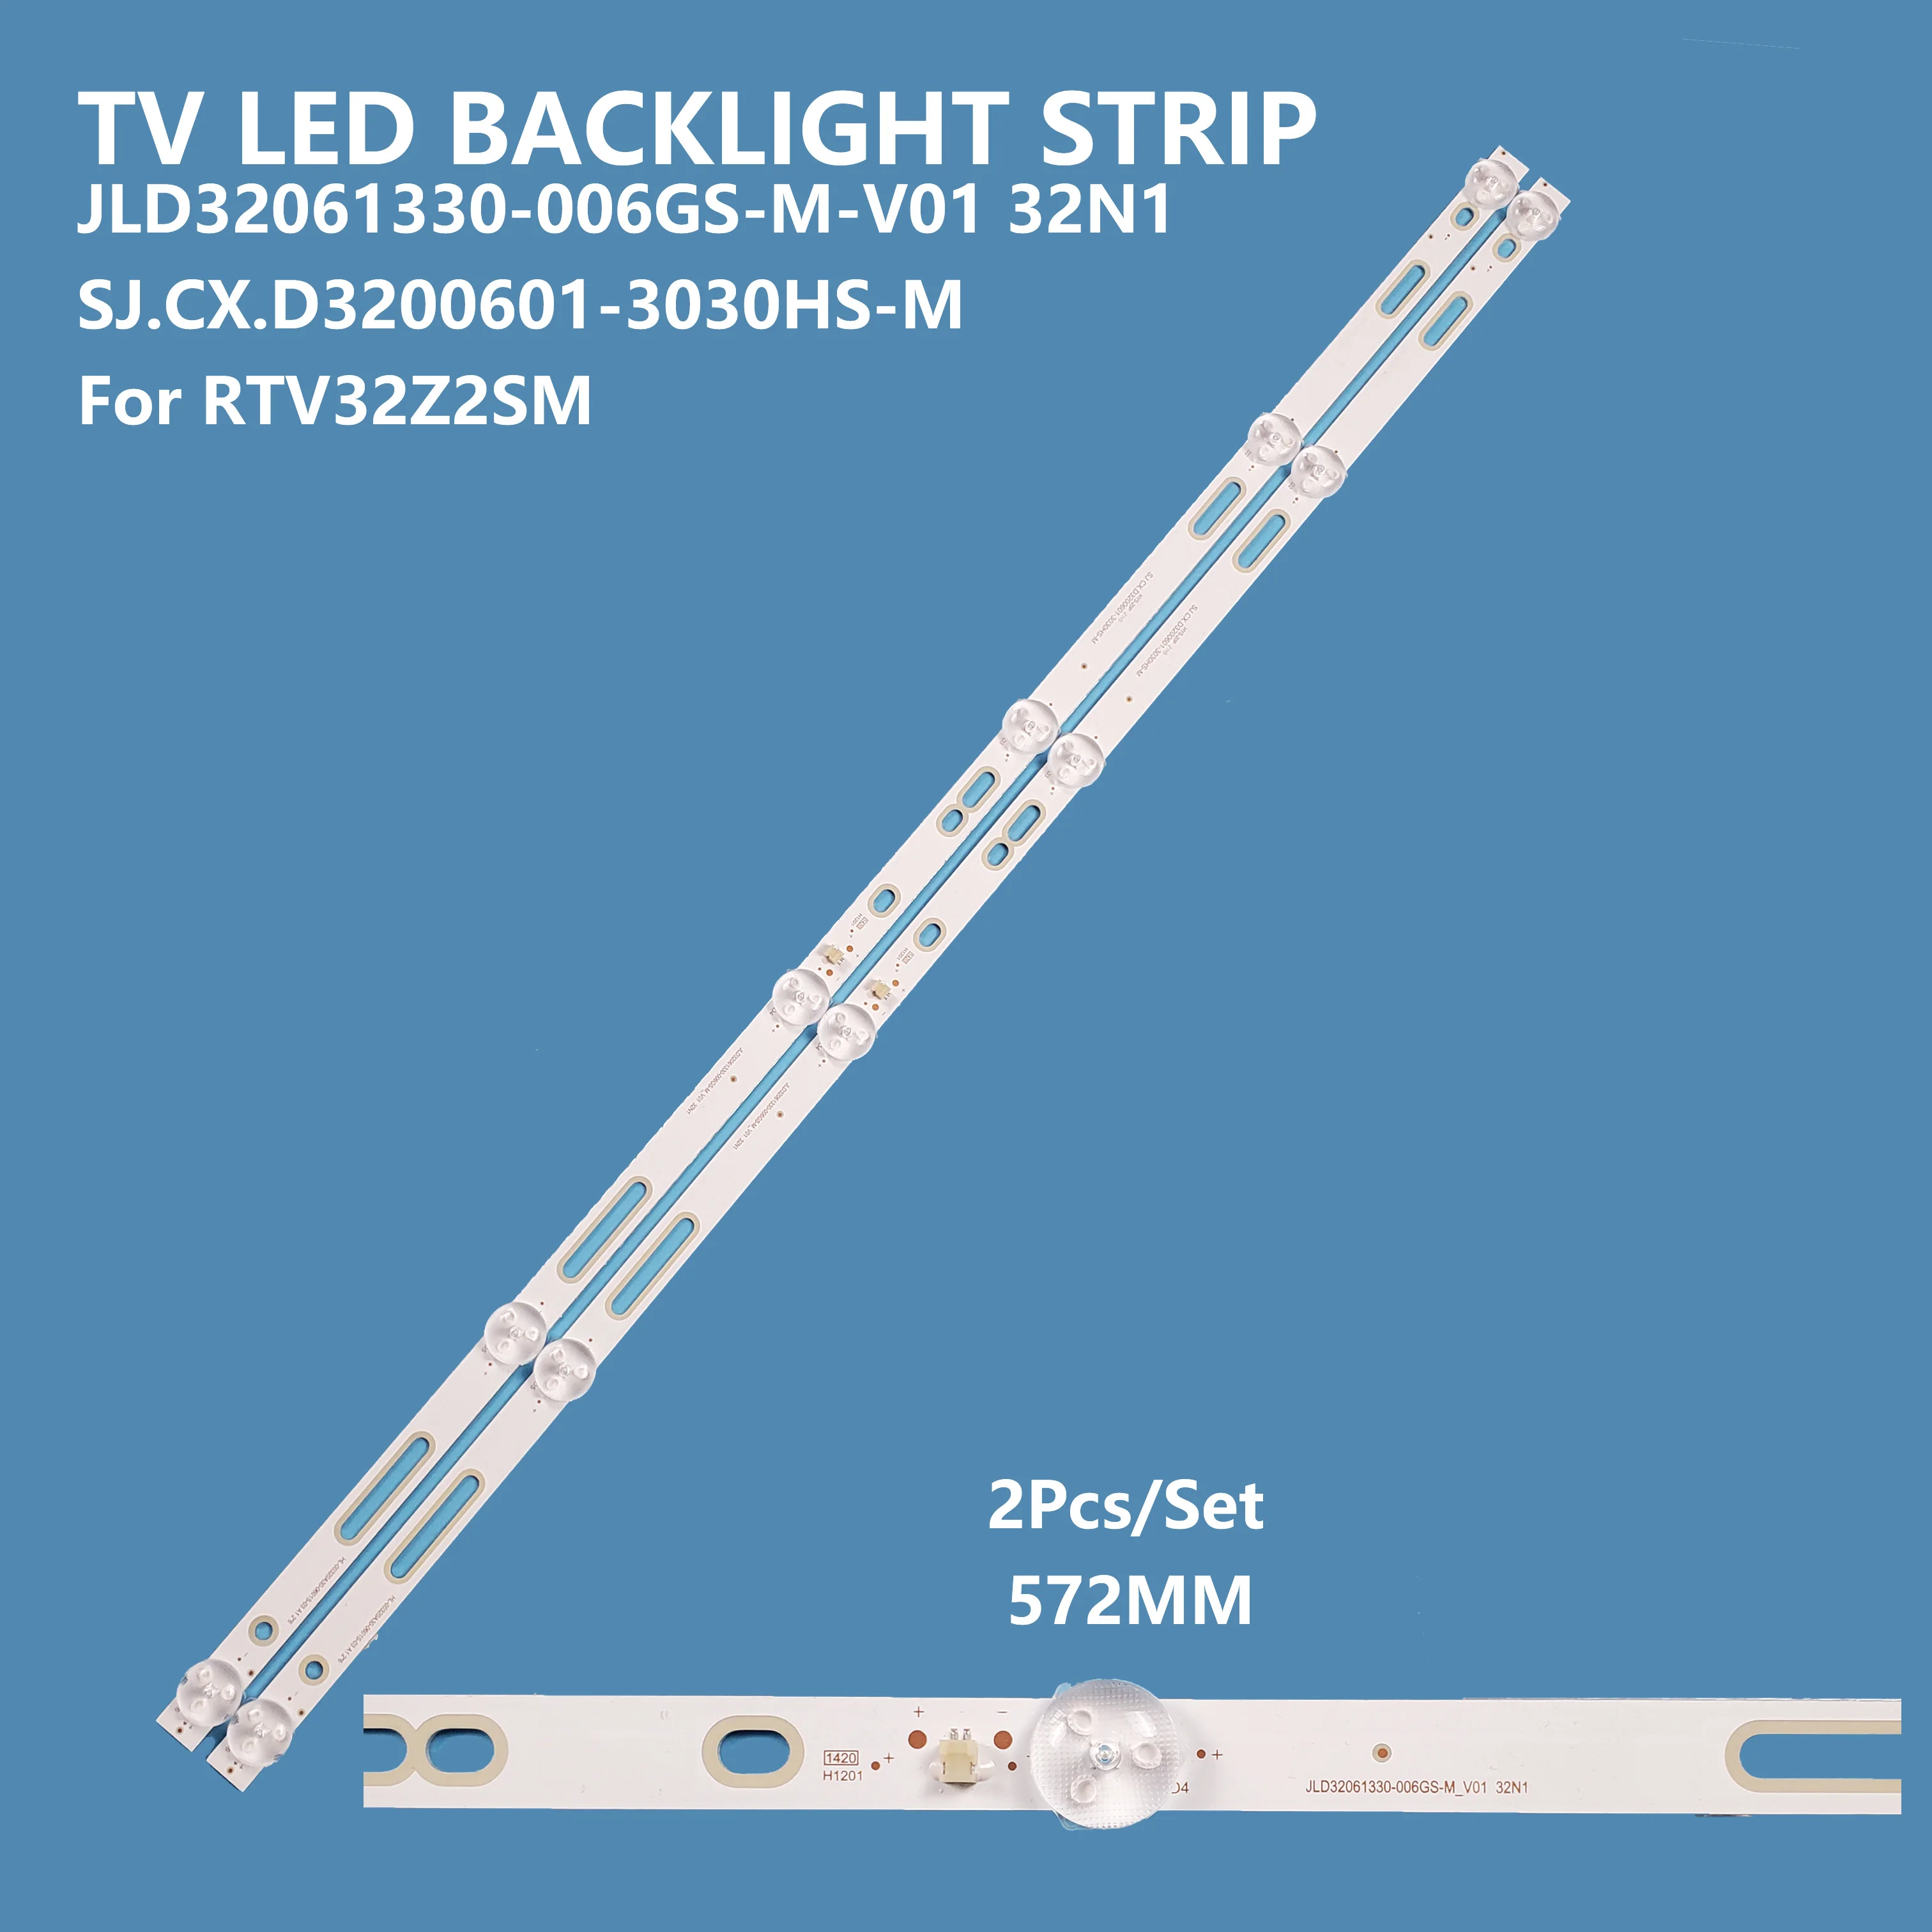 2Pcs/set LED Backlight Bar Light Strip JL.D32061330-006GS-M-V01 32N1 HL-00320A30-0601S-03 A1 for 32inch TV Accessories Repair 2pcs set tv backlight strips lights hs 018 d3200601 3030as for haier 32inch tv led tv strip light lcd backlight